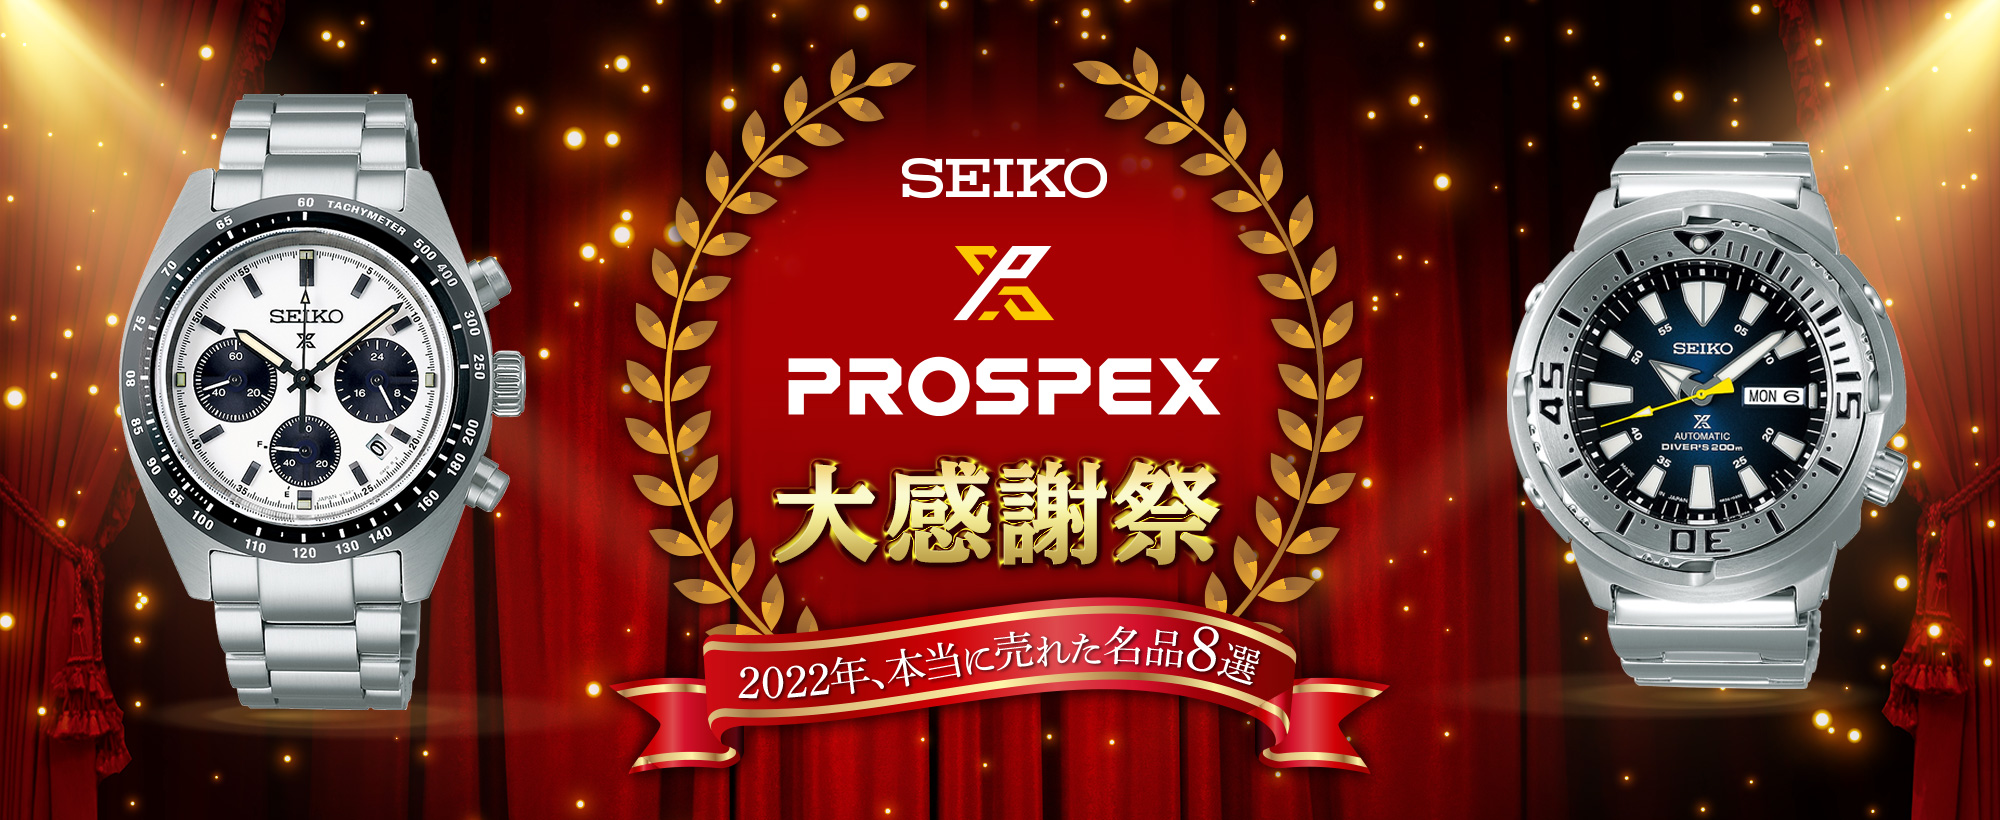 SEIKO プロスペックス大感謝祭!